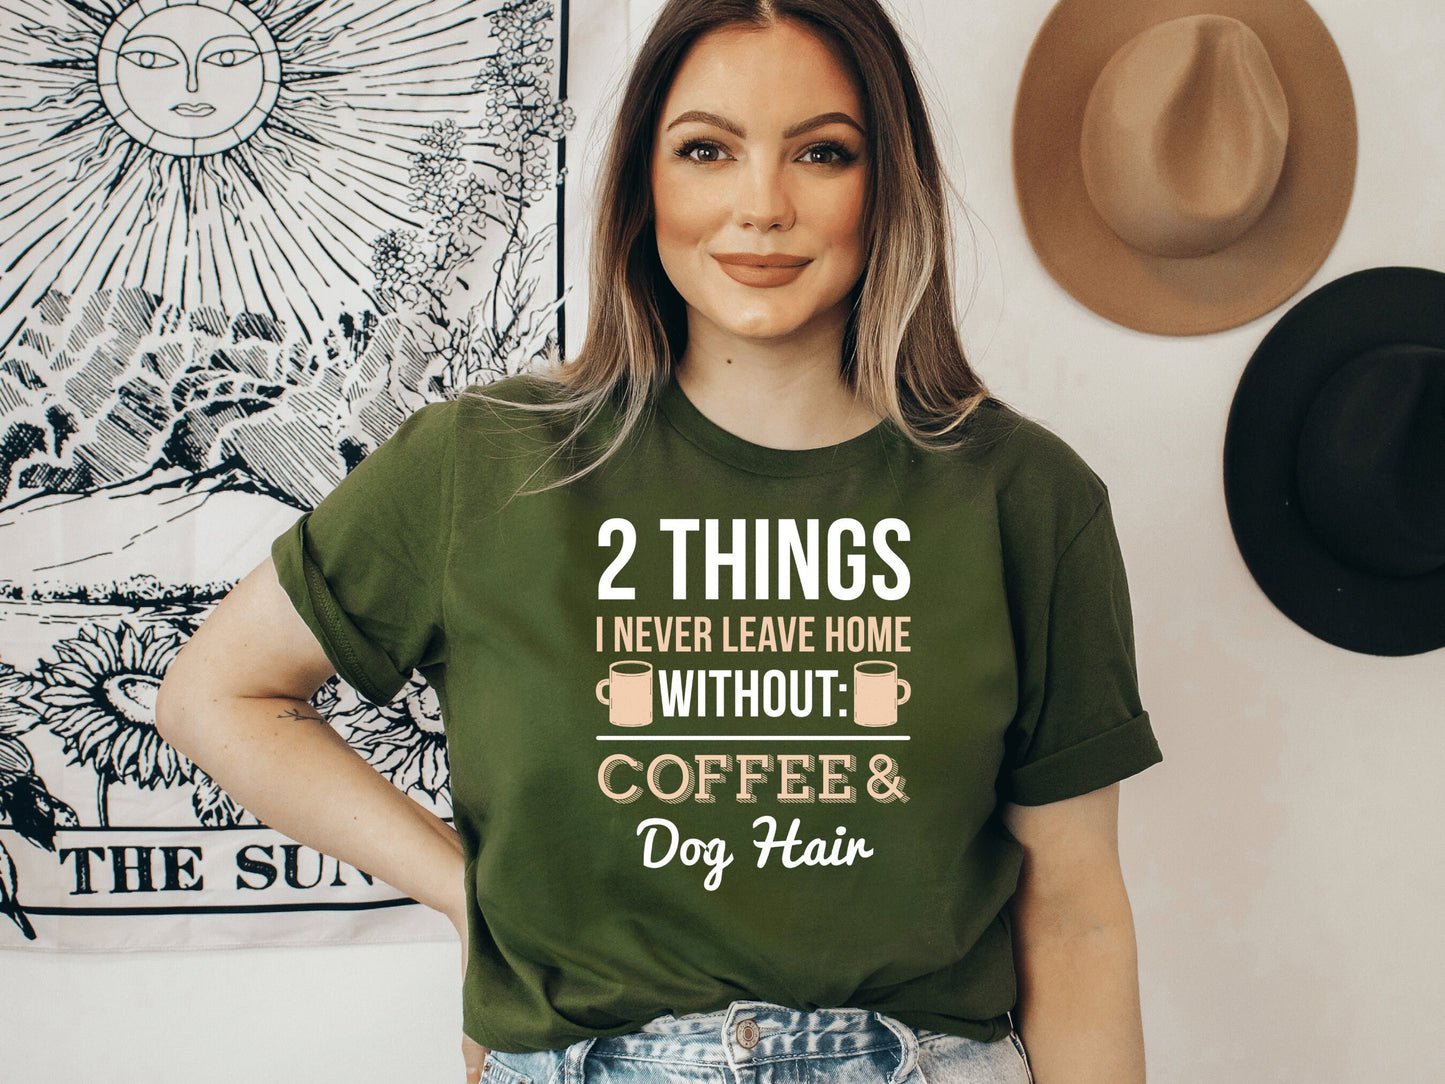 Funny Coffee & Dog Hair Graphic T Shirt, Fun Dog Mom Tee, Coffee Lover Shirt, Typography Dog Dad Tee, Mom Gift Idea, Casual Tee with Saying - Mardonyx T-Shirt Olive / S